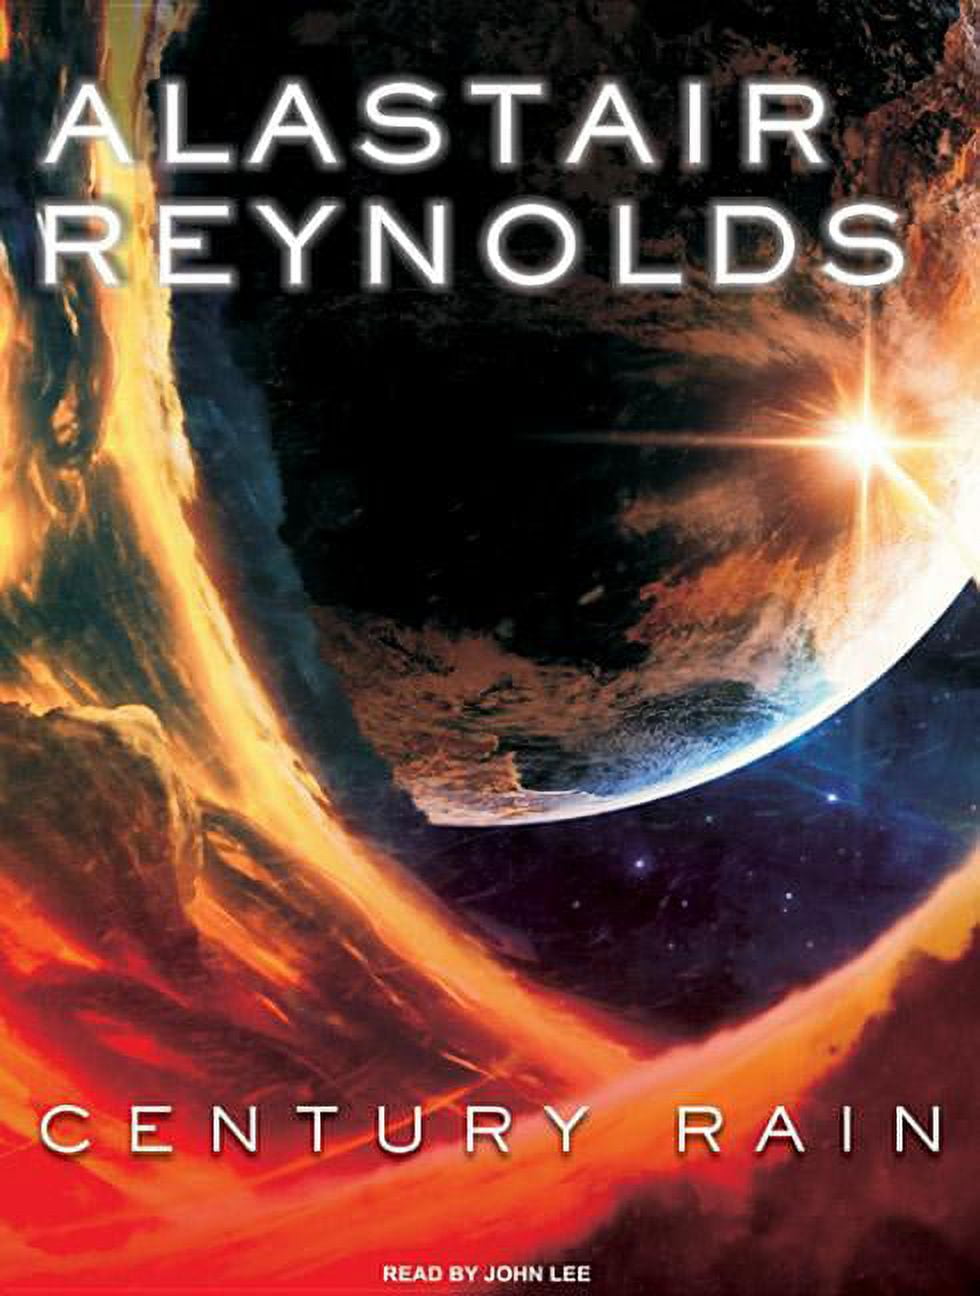 CENTURY RAIN, Alastair Reynolds